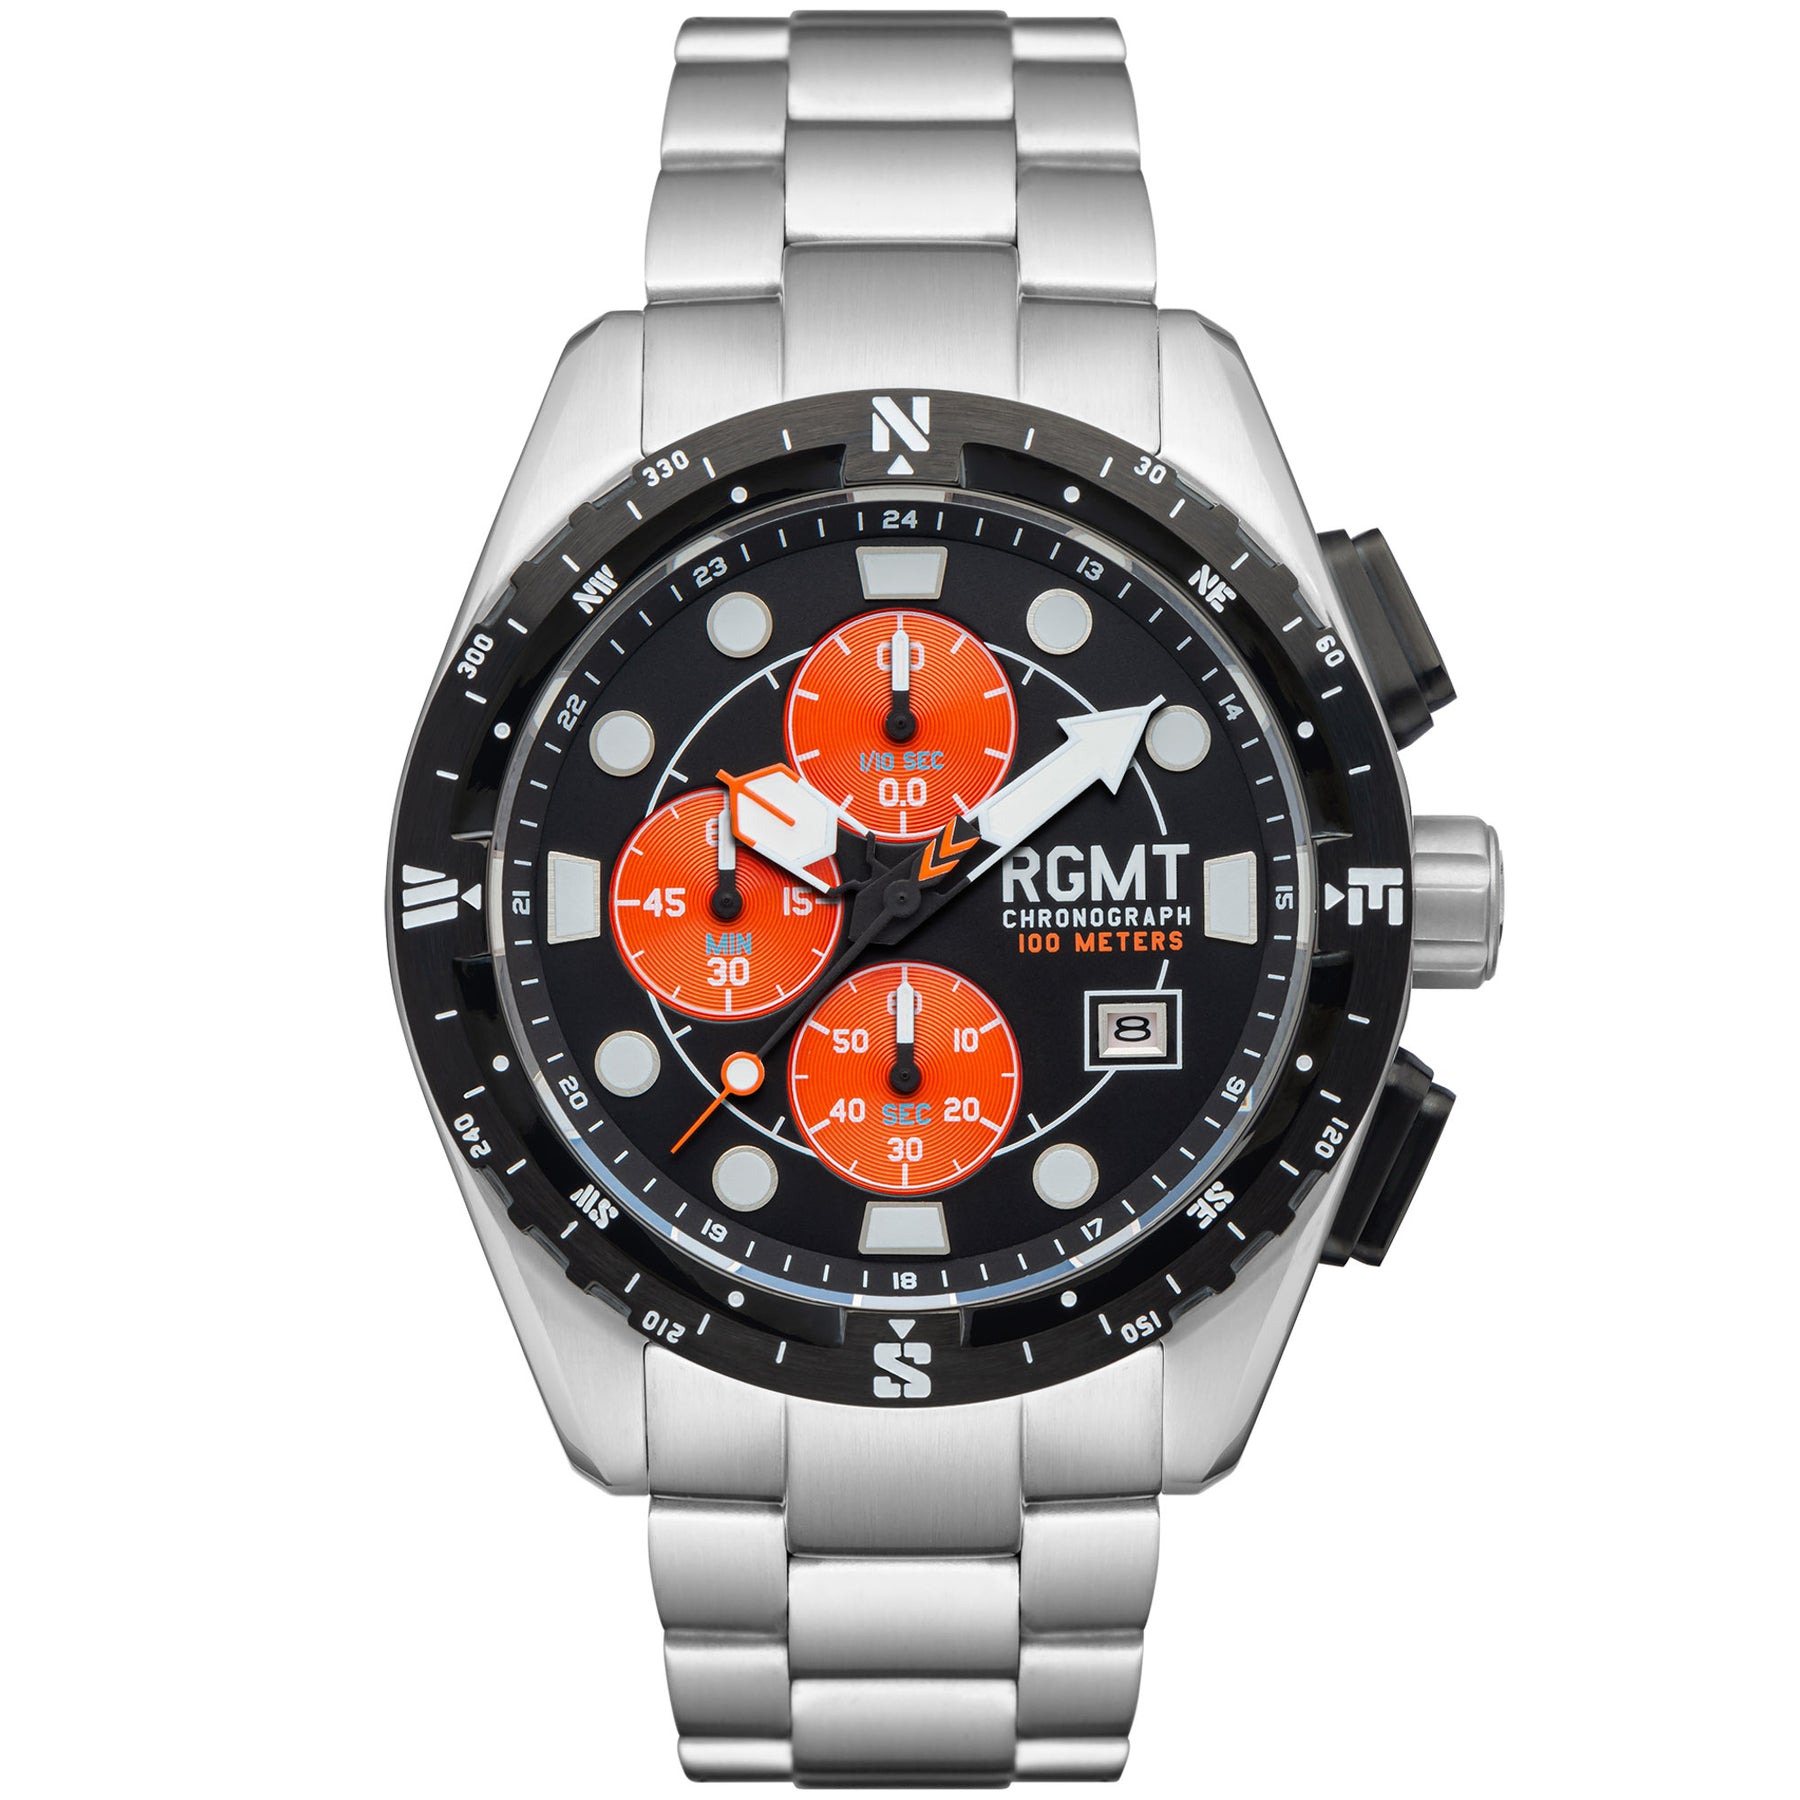 RGMT Surveyor Chronograph Black Orange | Watches.com